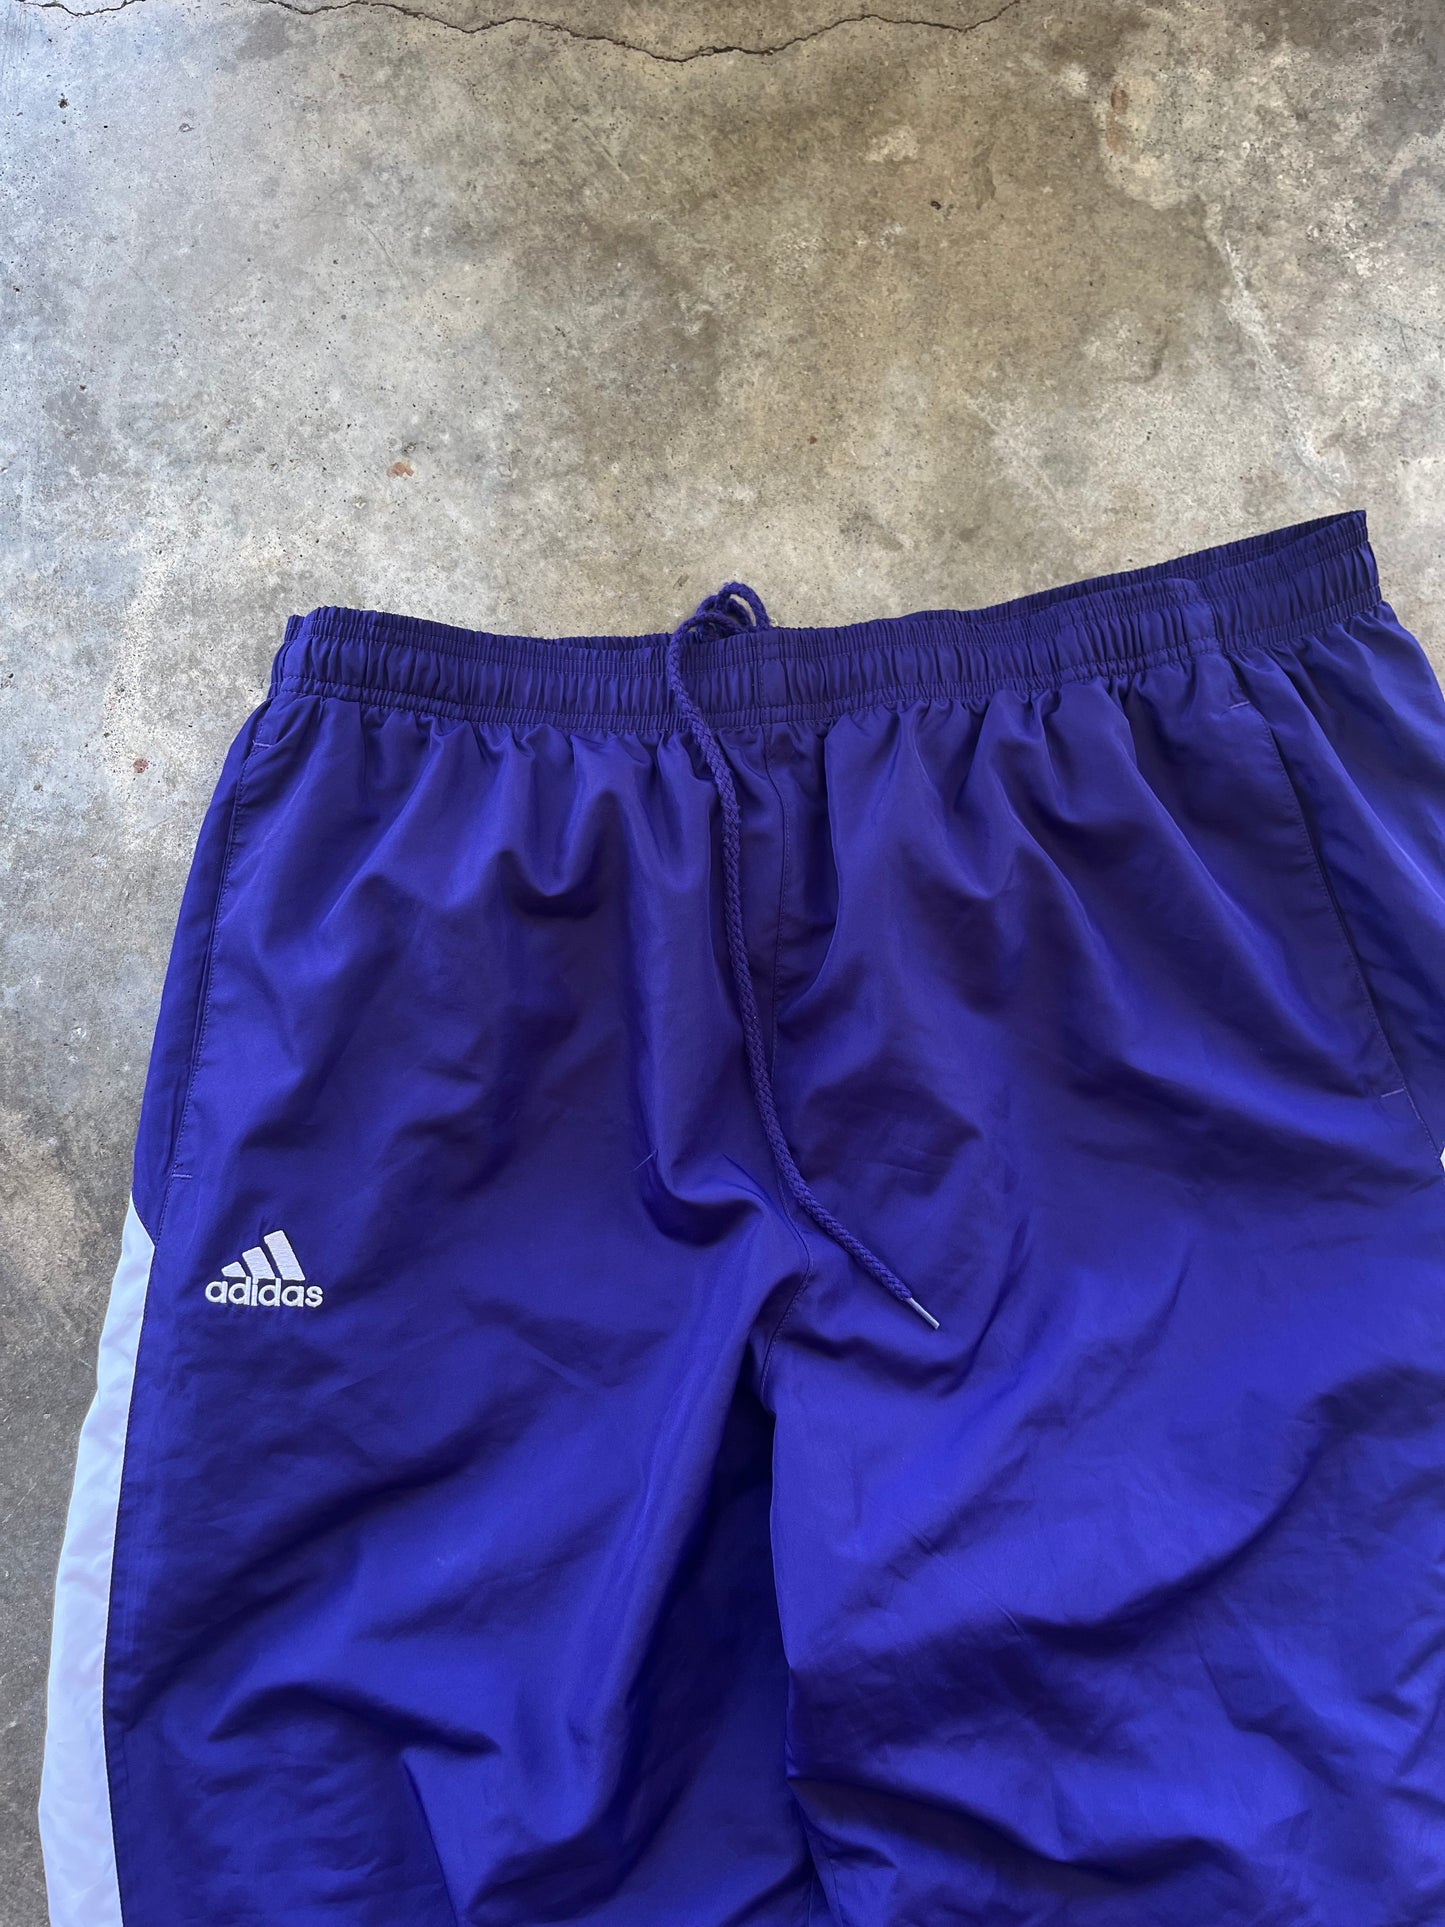 (XXL) Adidas Track Pants PURPLE